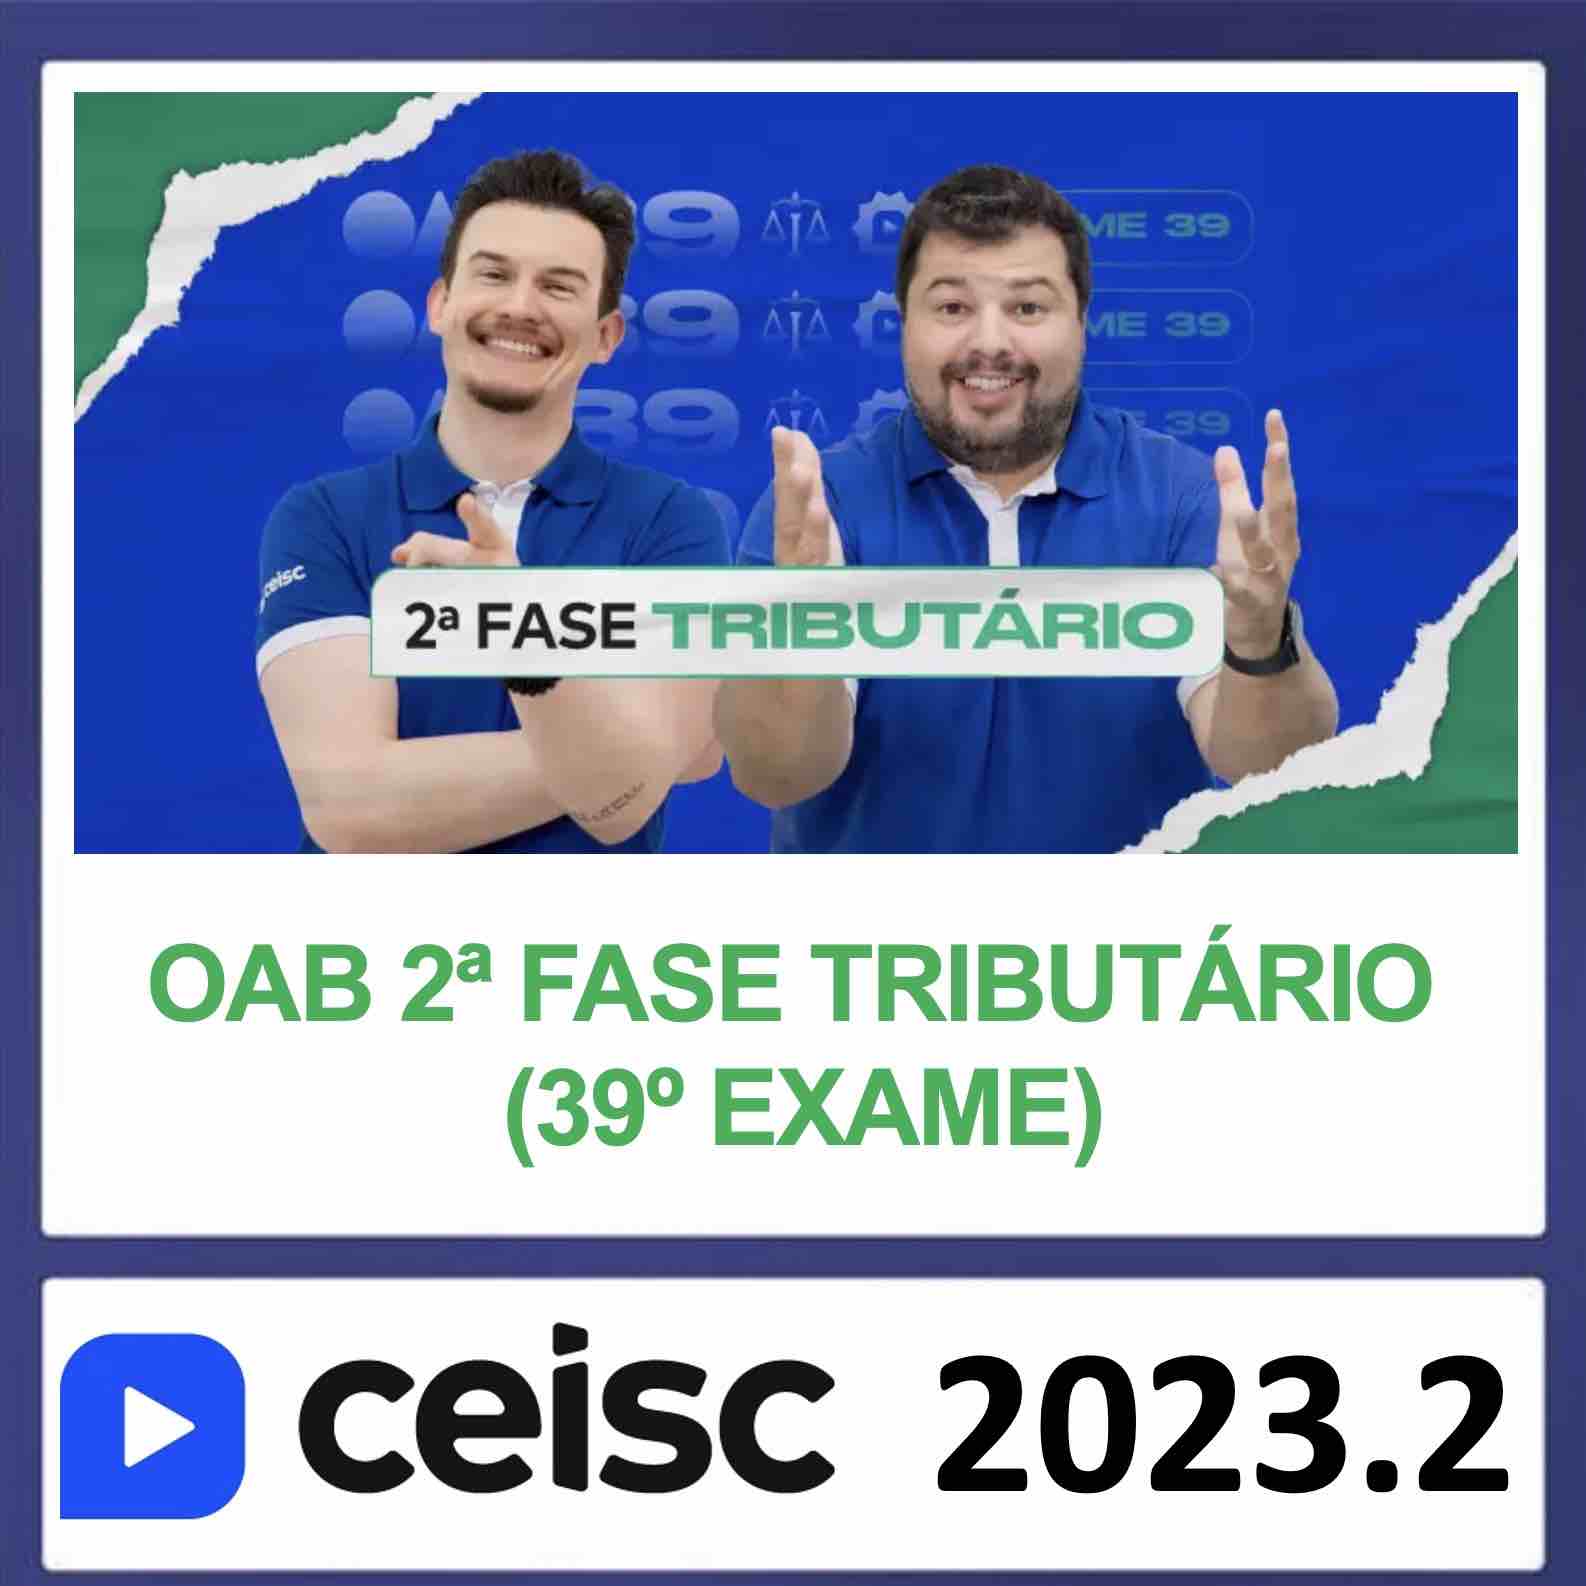 Rateio OAB 39º Exame (XXXIX) - 1ª Fase - Acesso Total - 2023 - CERS